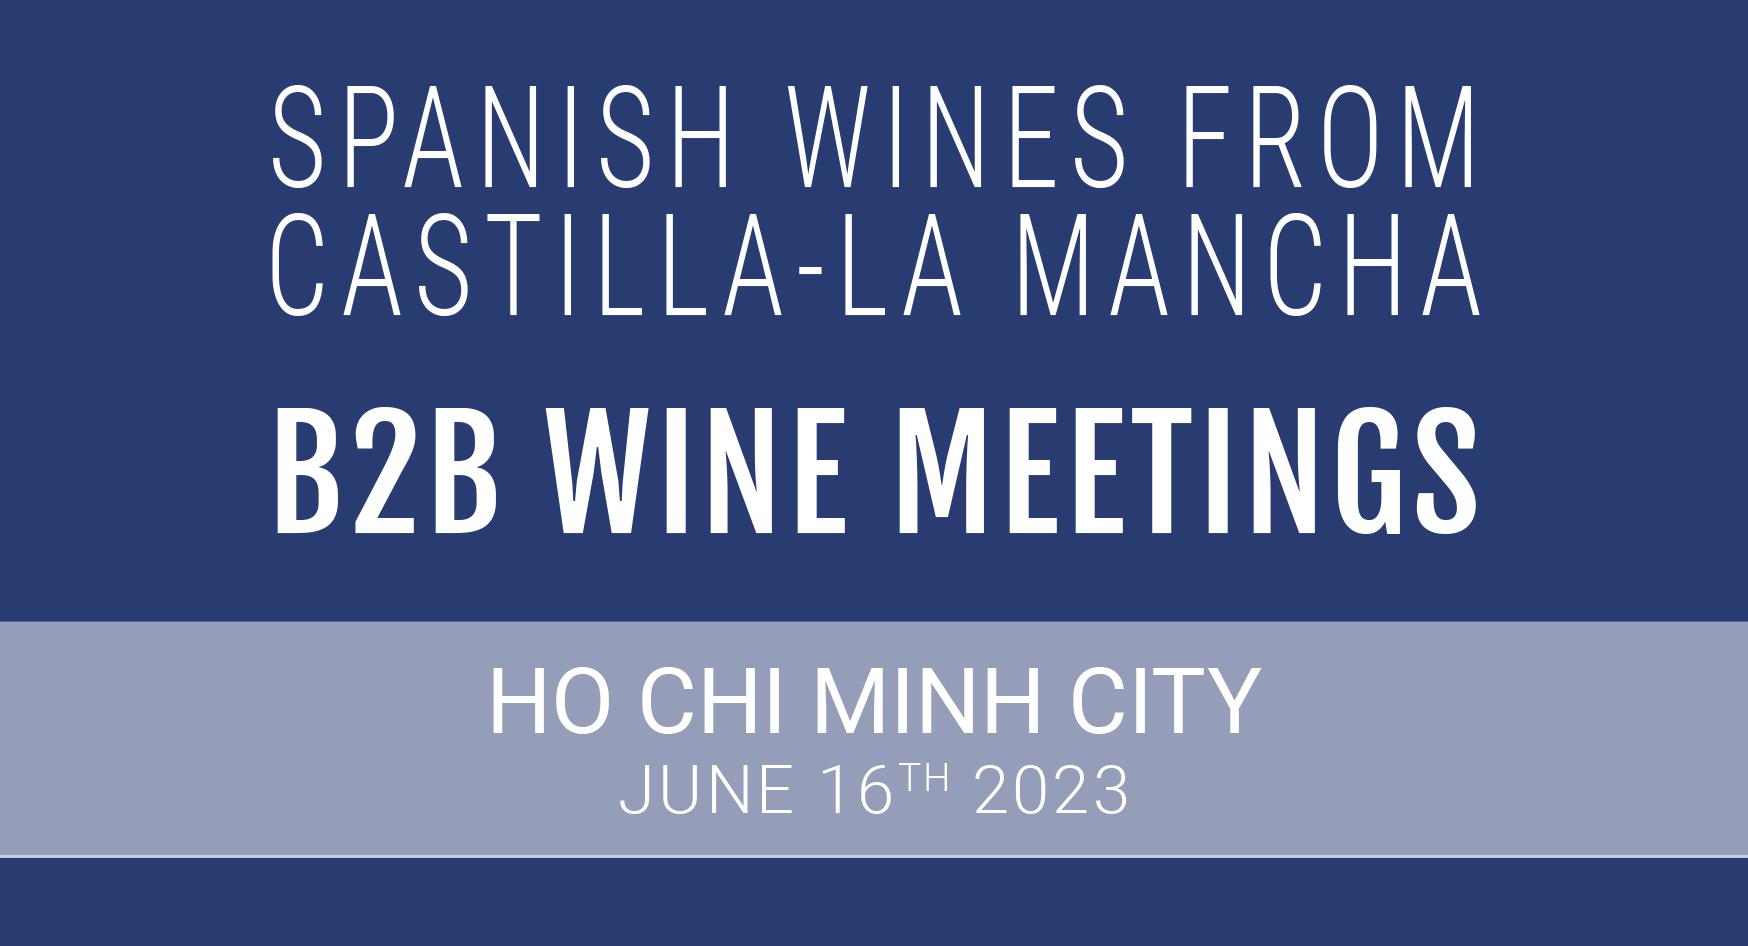 Spanish wines from Castilla-La Mancha 2023